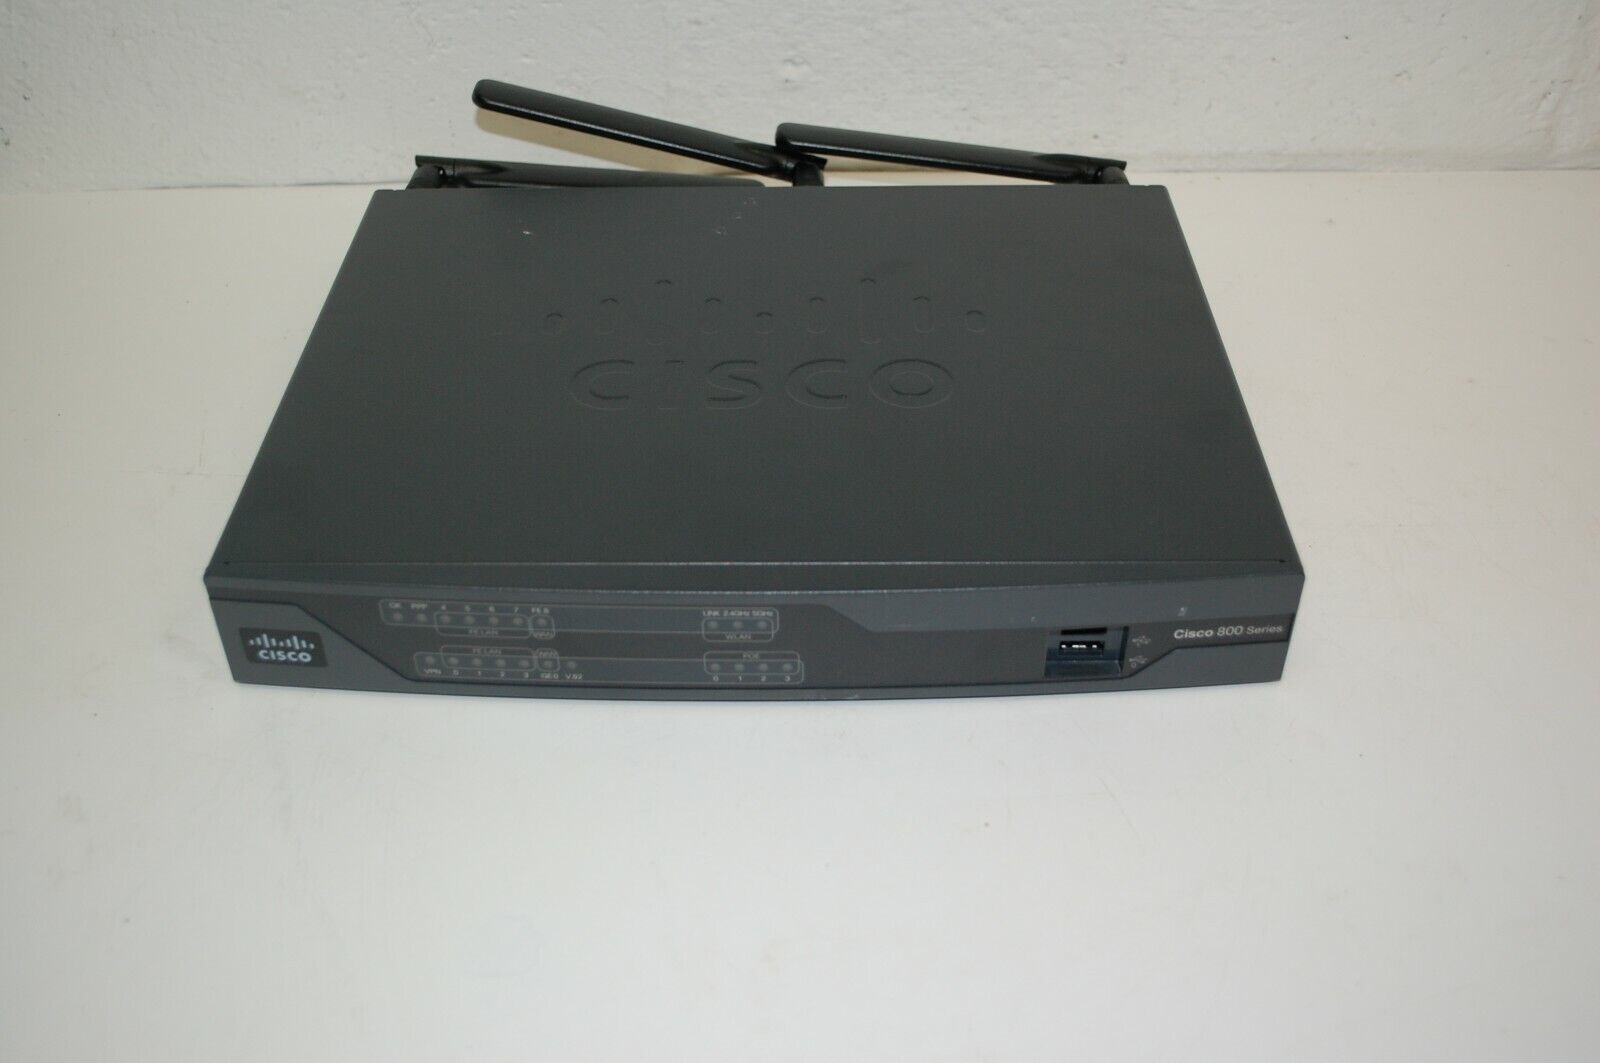 Cisco CISCO891W-AGN-A-K9 891W Gigabit Router Antenna NO POWER ADAPTER